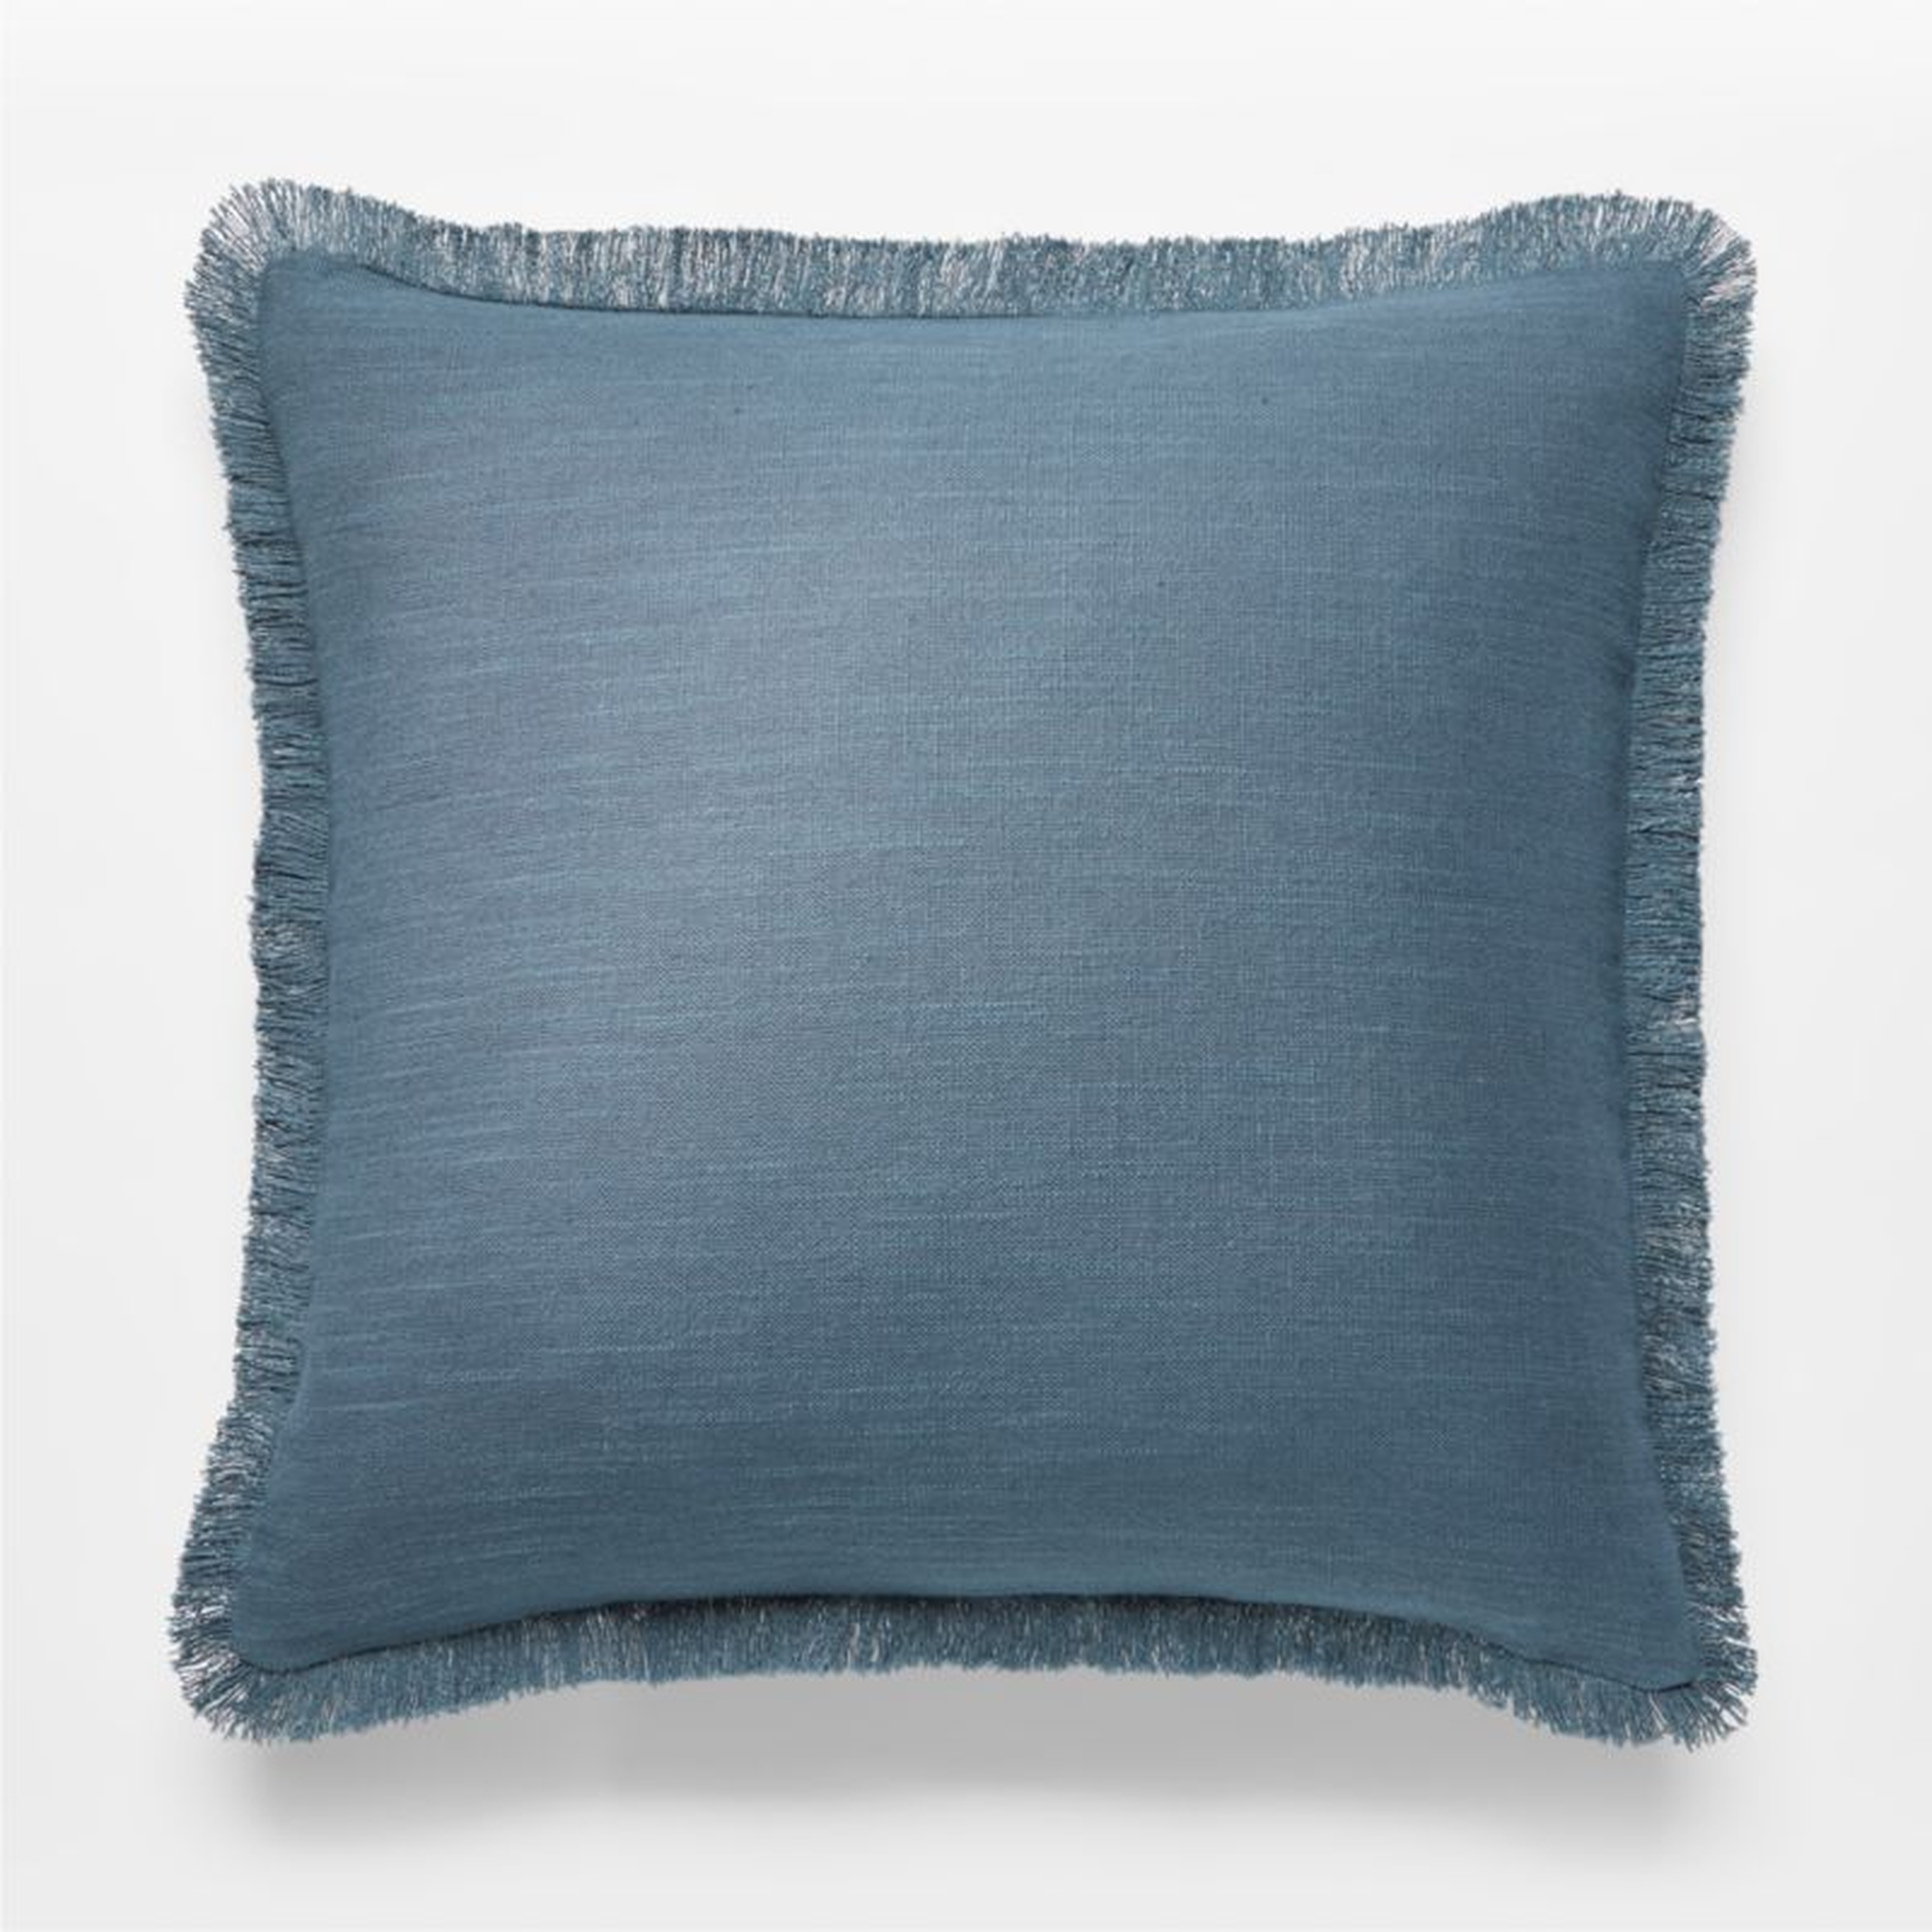 Eyelash Pillow, Feather-Down Insert, Blue, 20" x 20" - CB2